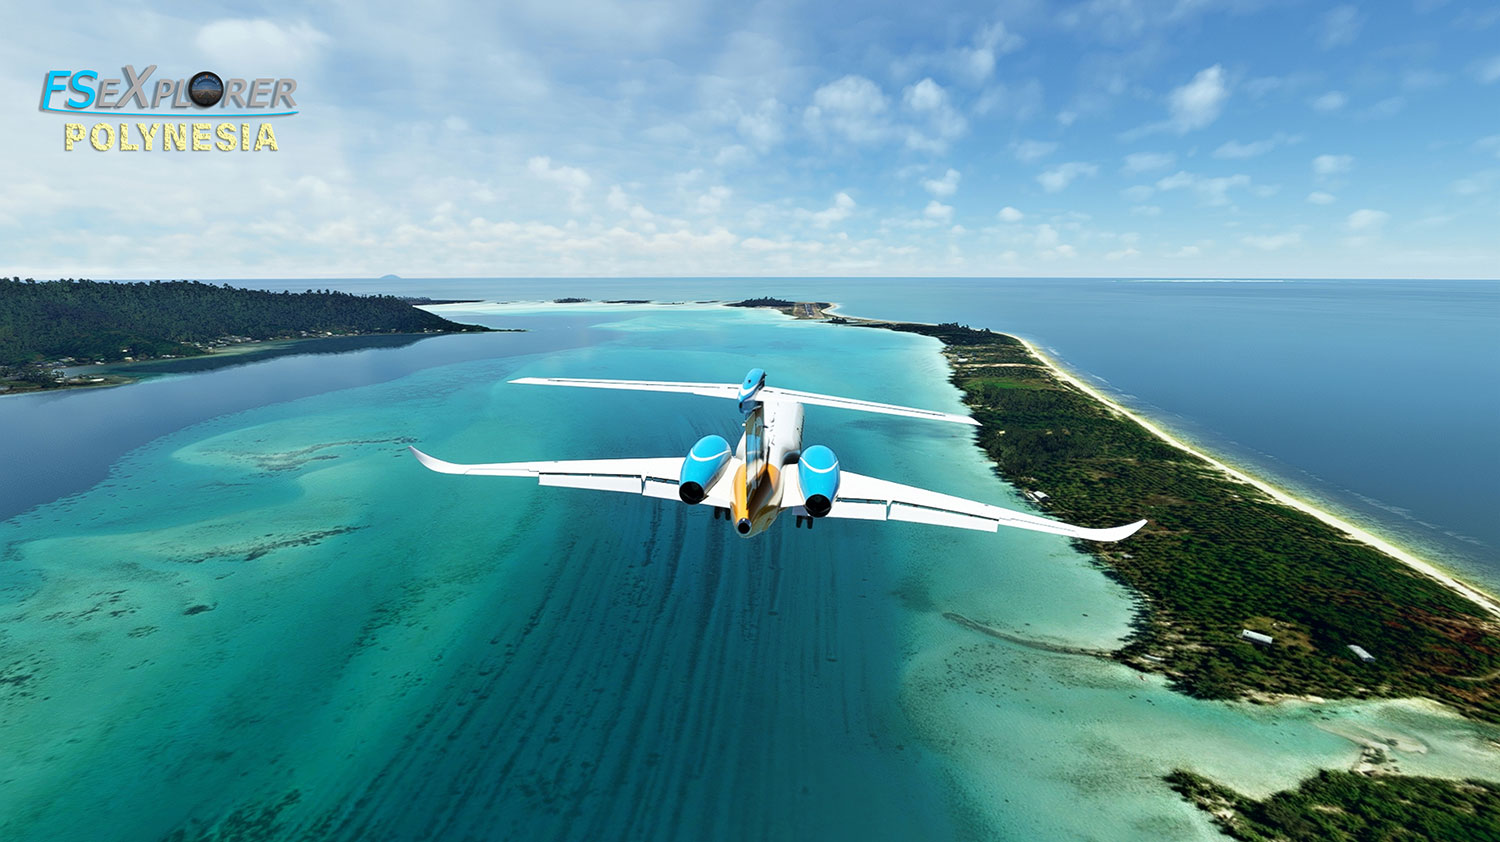 Perfect Flight - FS Explorer - Polynesia MSFS